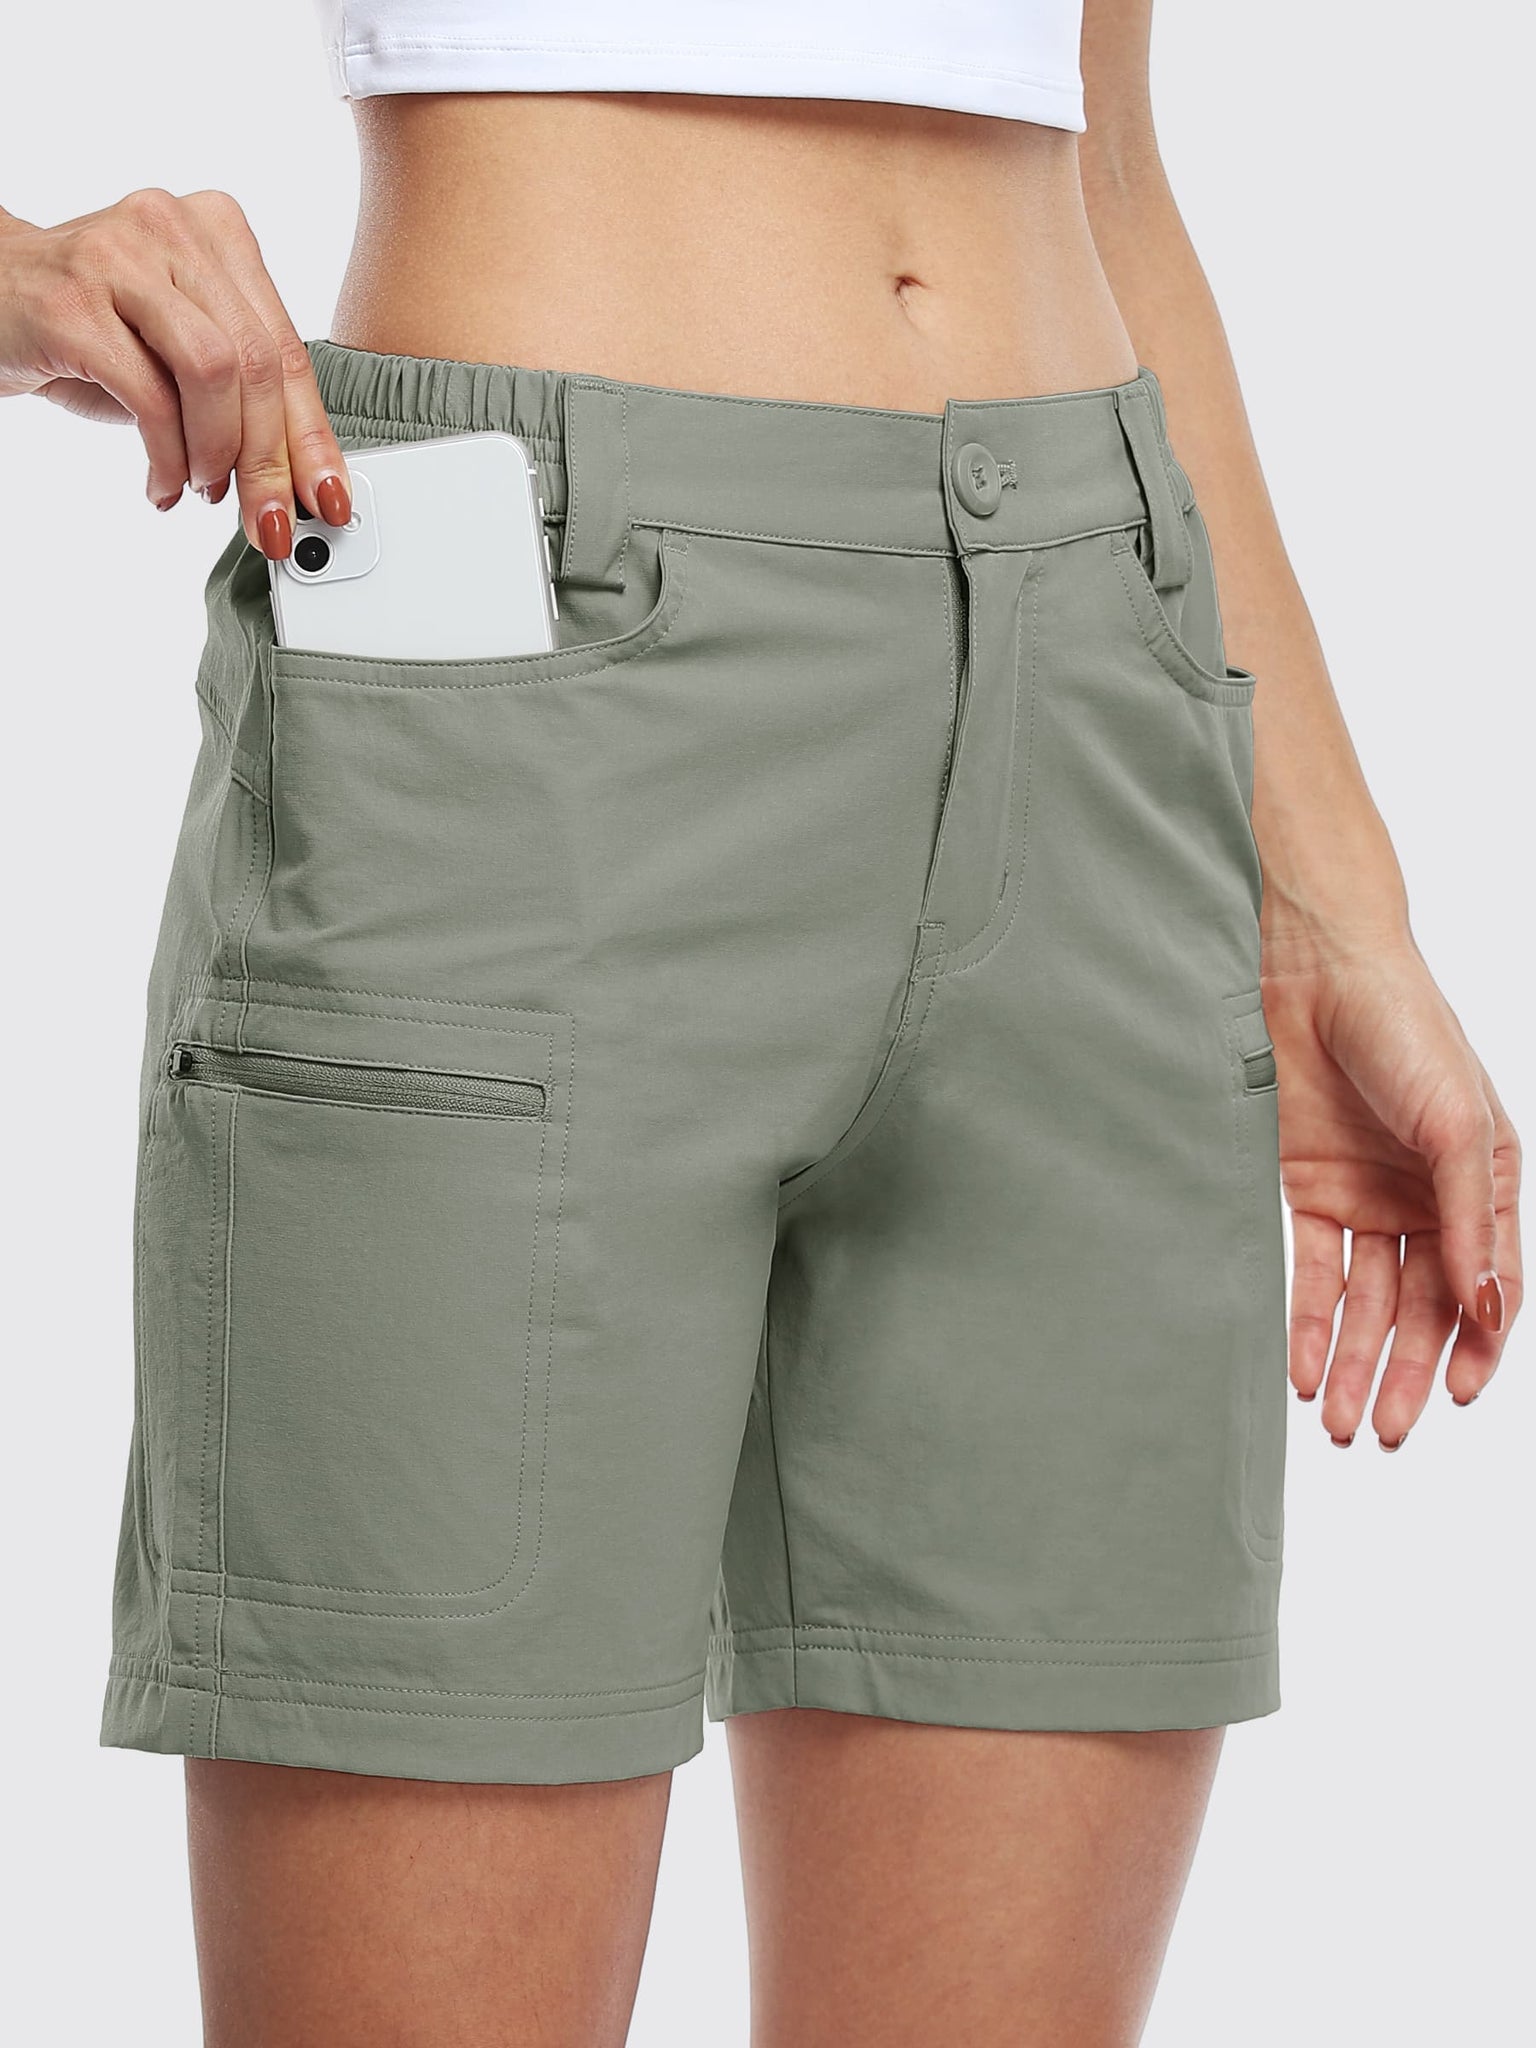 Willit Women's Outdoor Cargo Shorts 6 Inseam_Green_model2